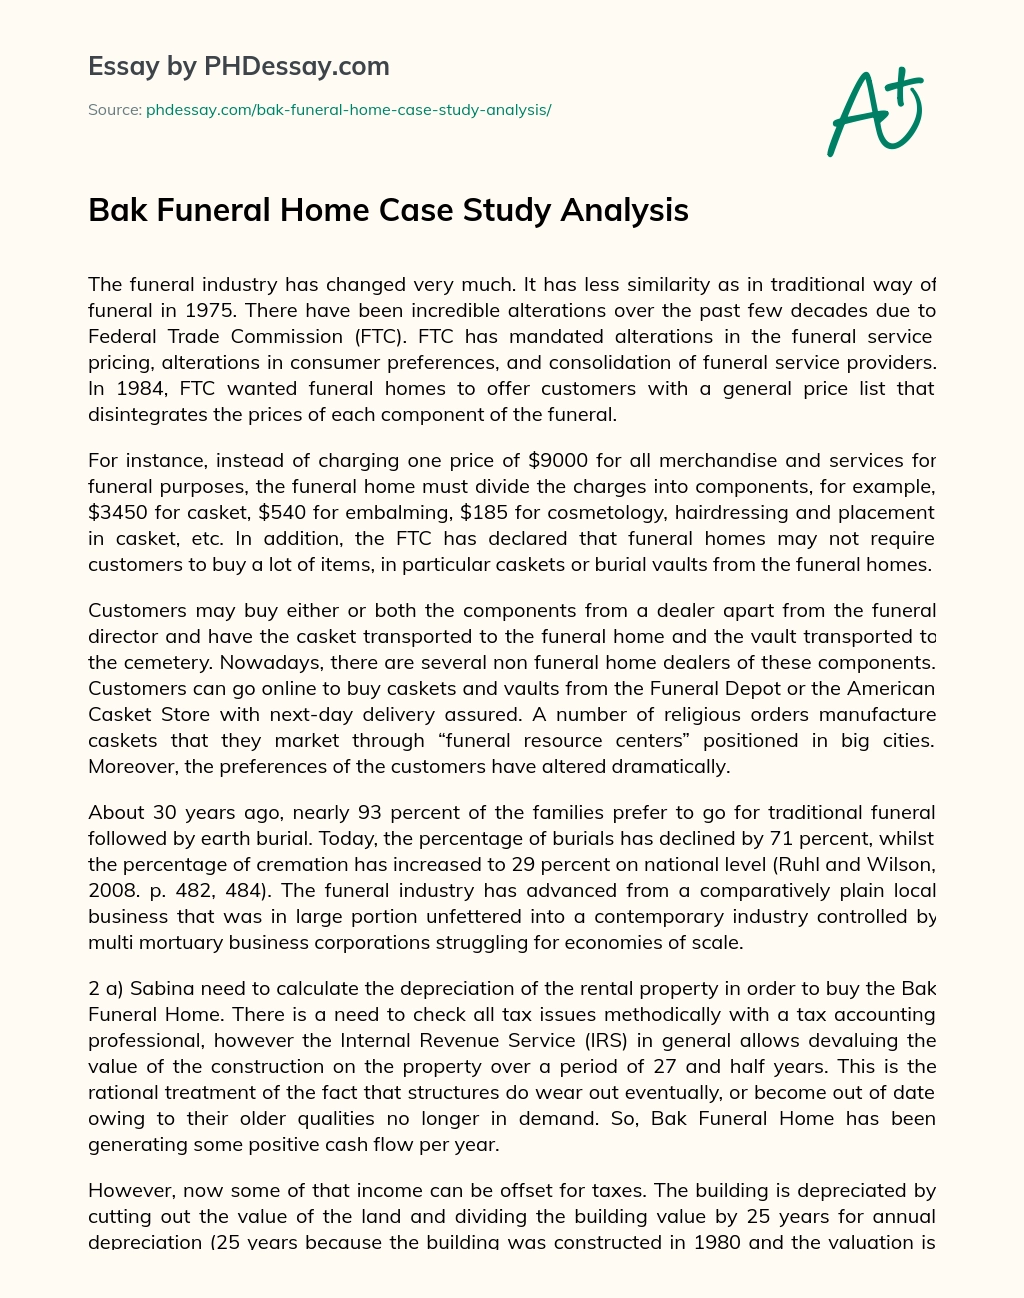 Bak Funeral Home Case Study Analysis essay